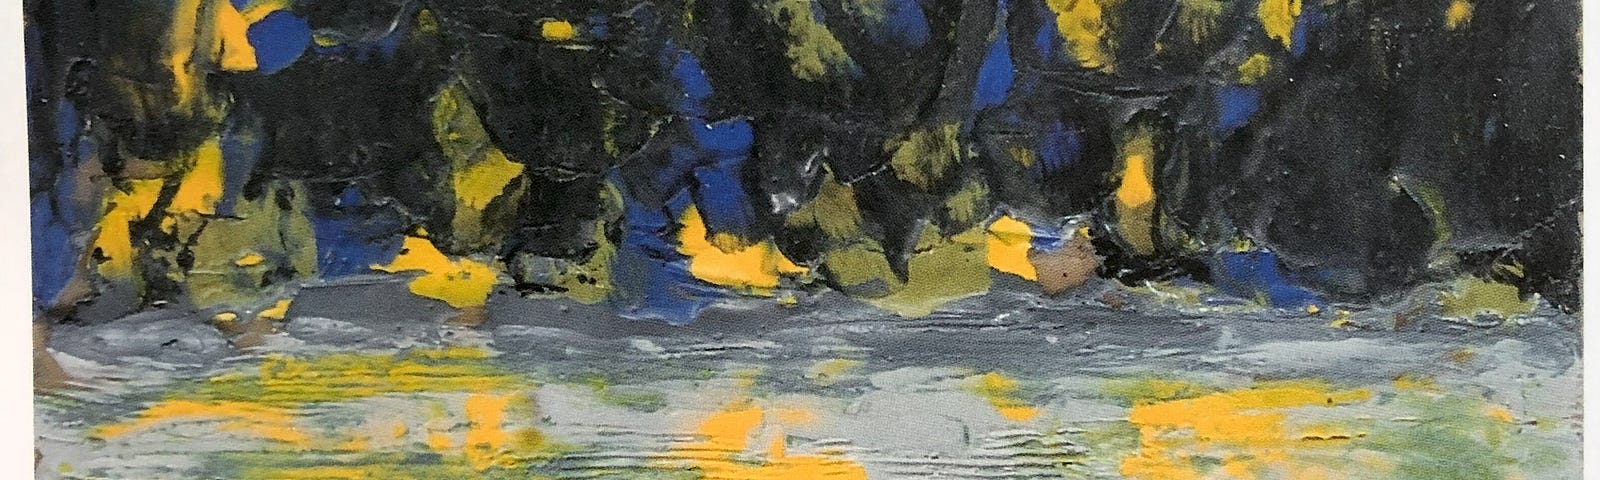 “Sunlit River”, encaustic on panel, by Cynthia Herron, 2007